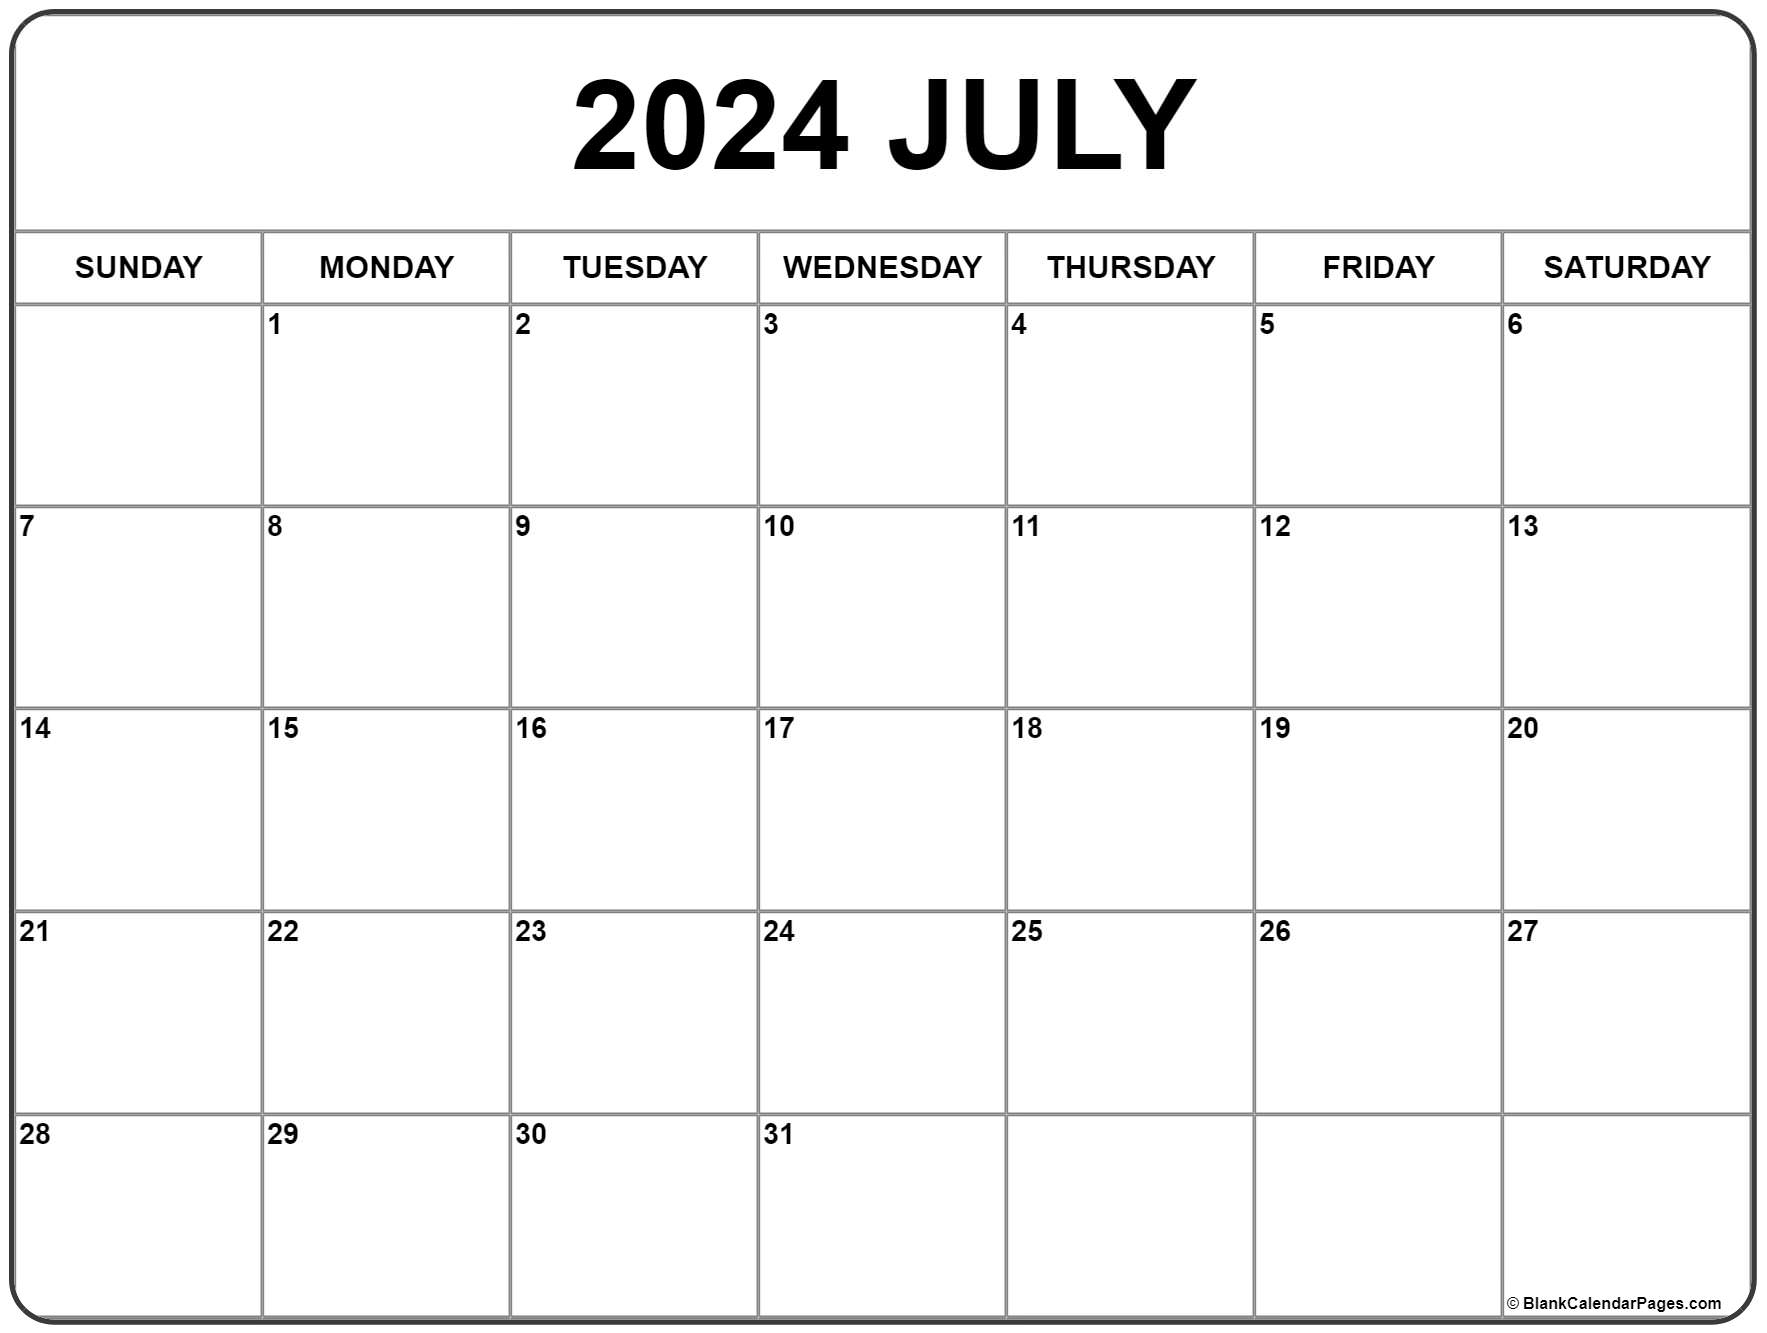 2021 July Calendar Printable July 2021 calendar | free printable monthly calendars